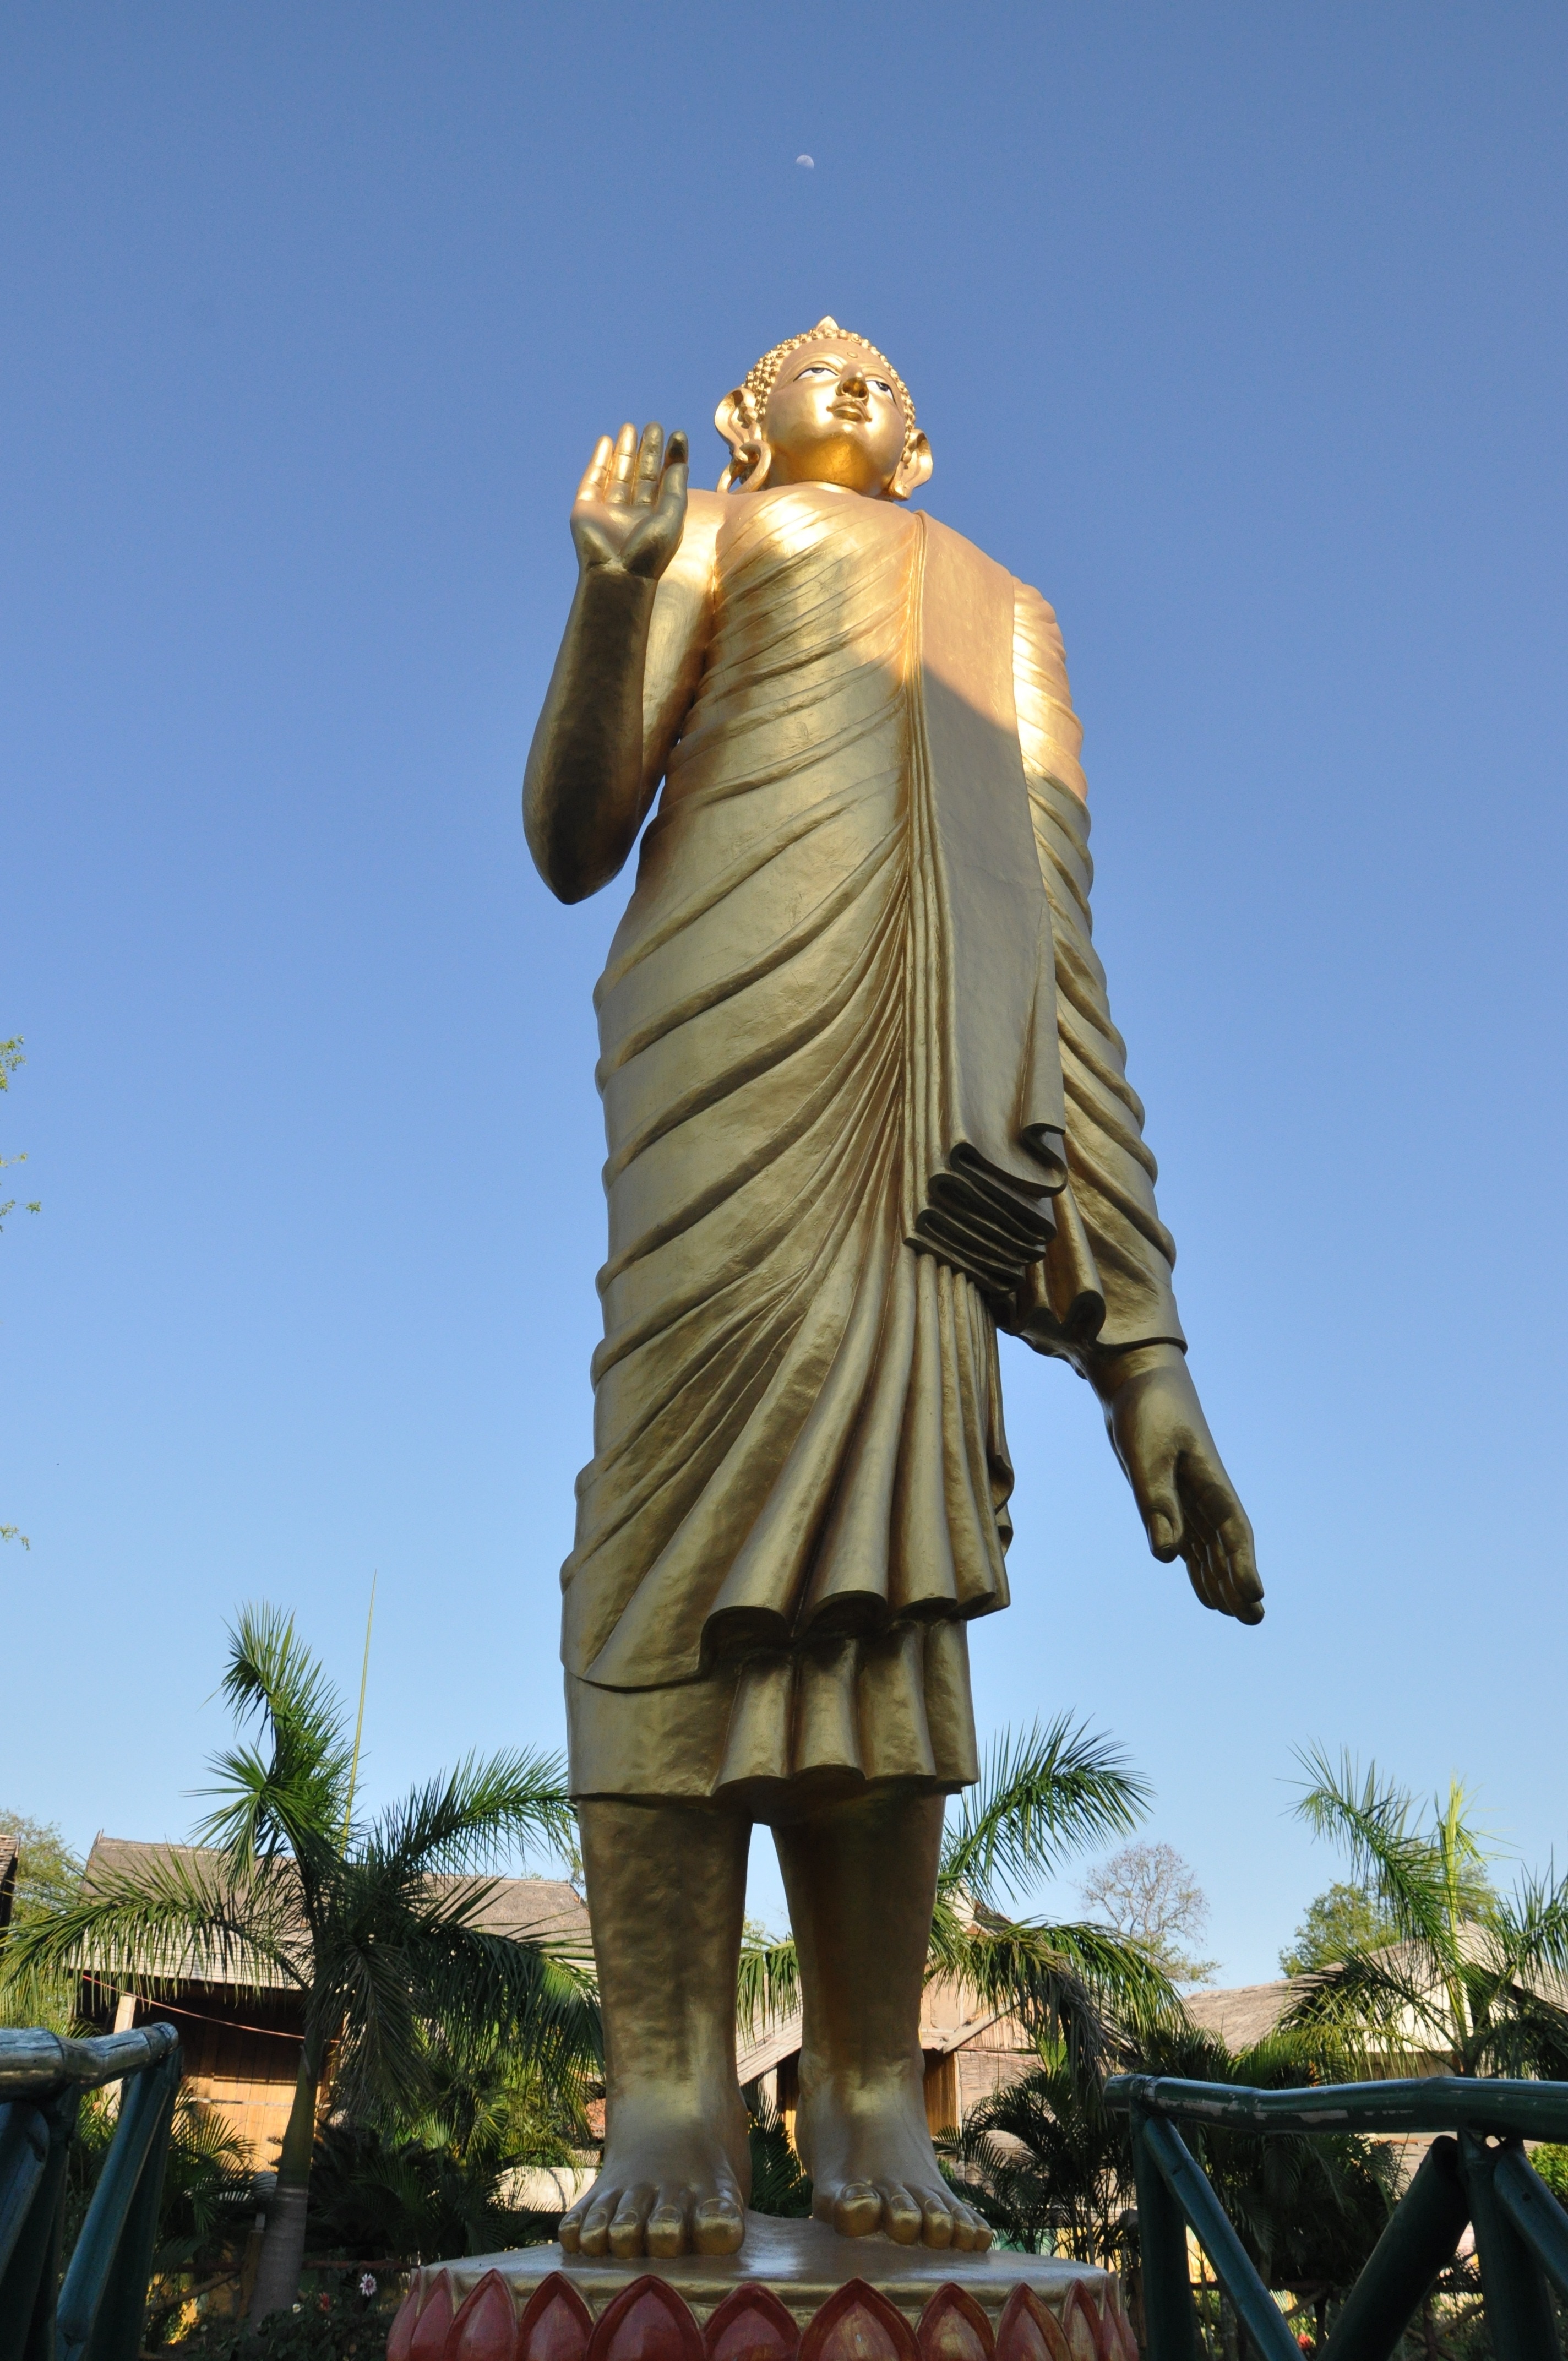 gold religious figure statue